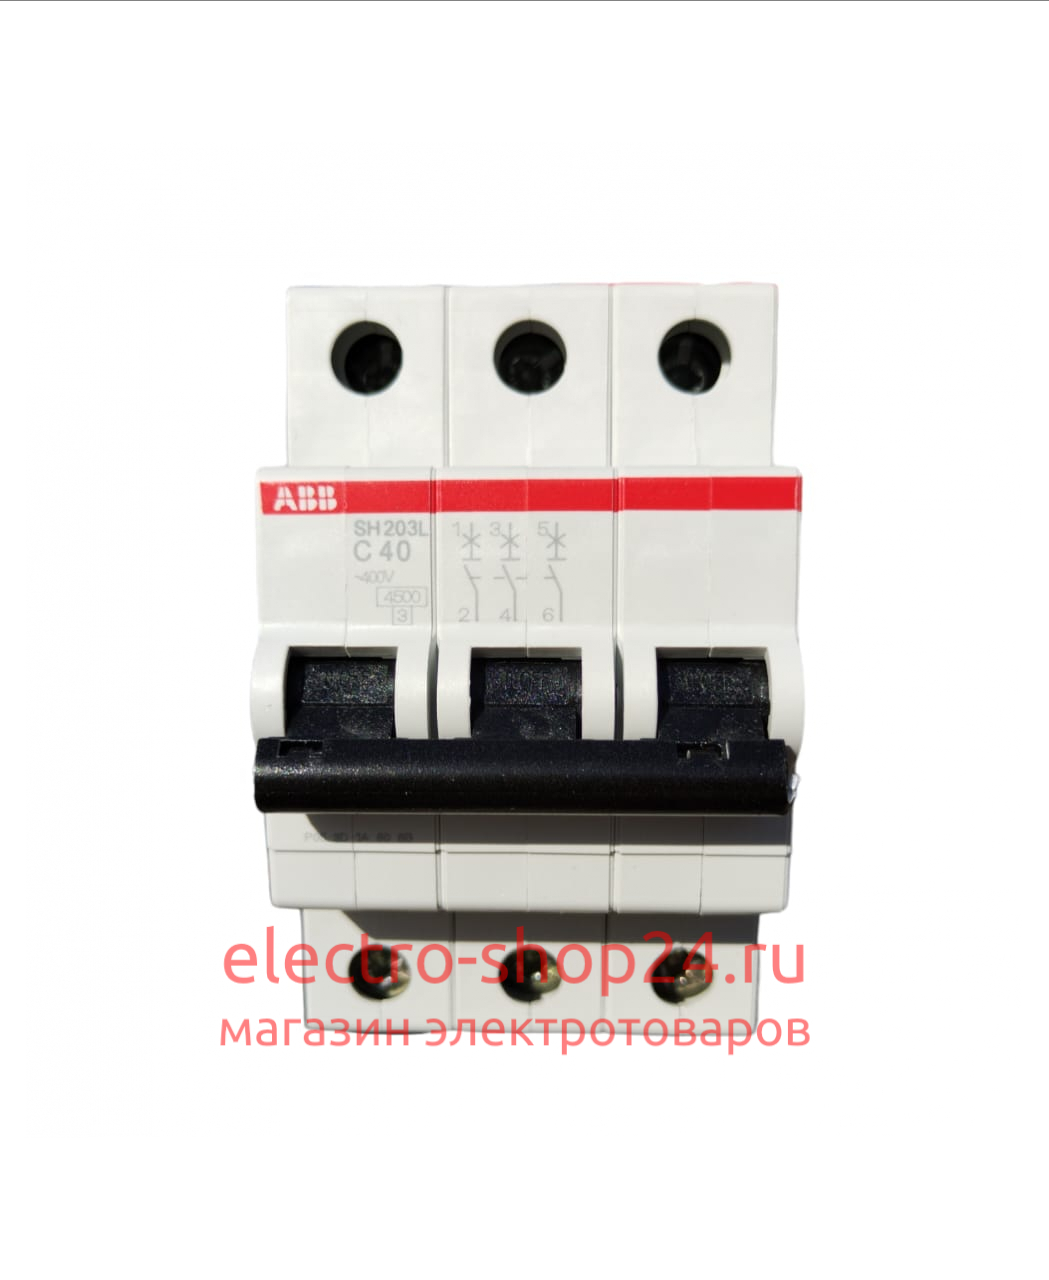 SH203L C40 Автоматический выключатель 3-полюсный 40А 4,5кА (хар-ка C) ABB 2CDS243001R0404 2CDS243001R0404 - магазин электротехники Electroshop